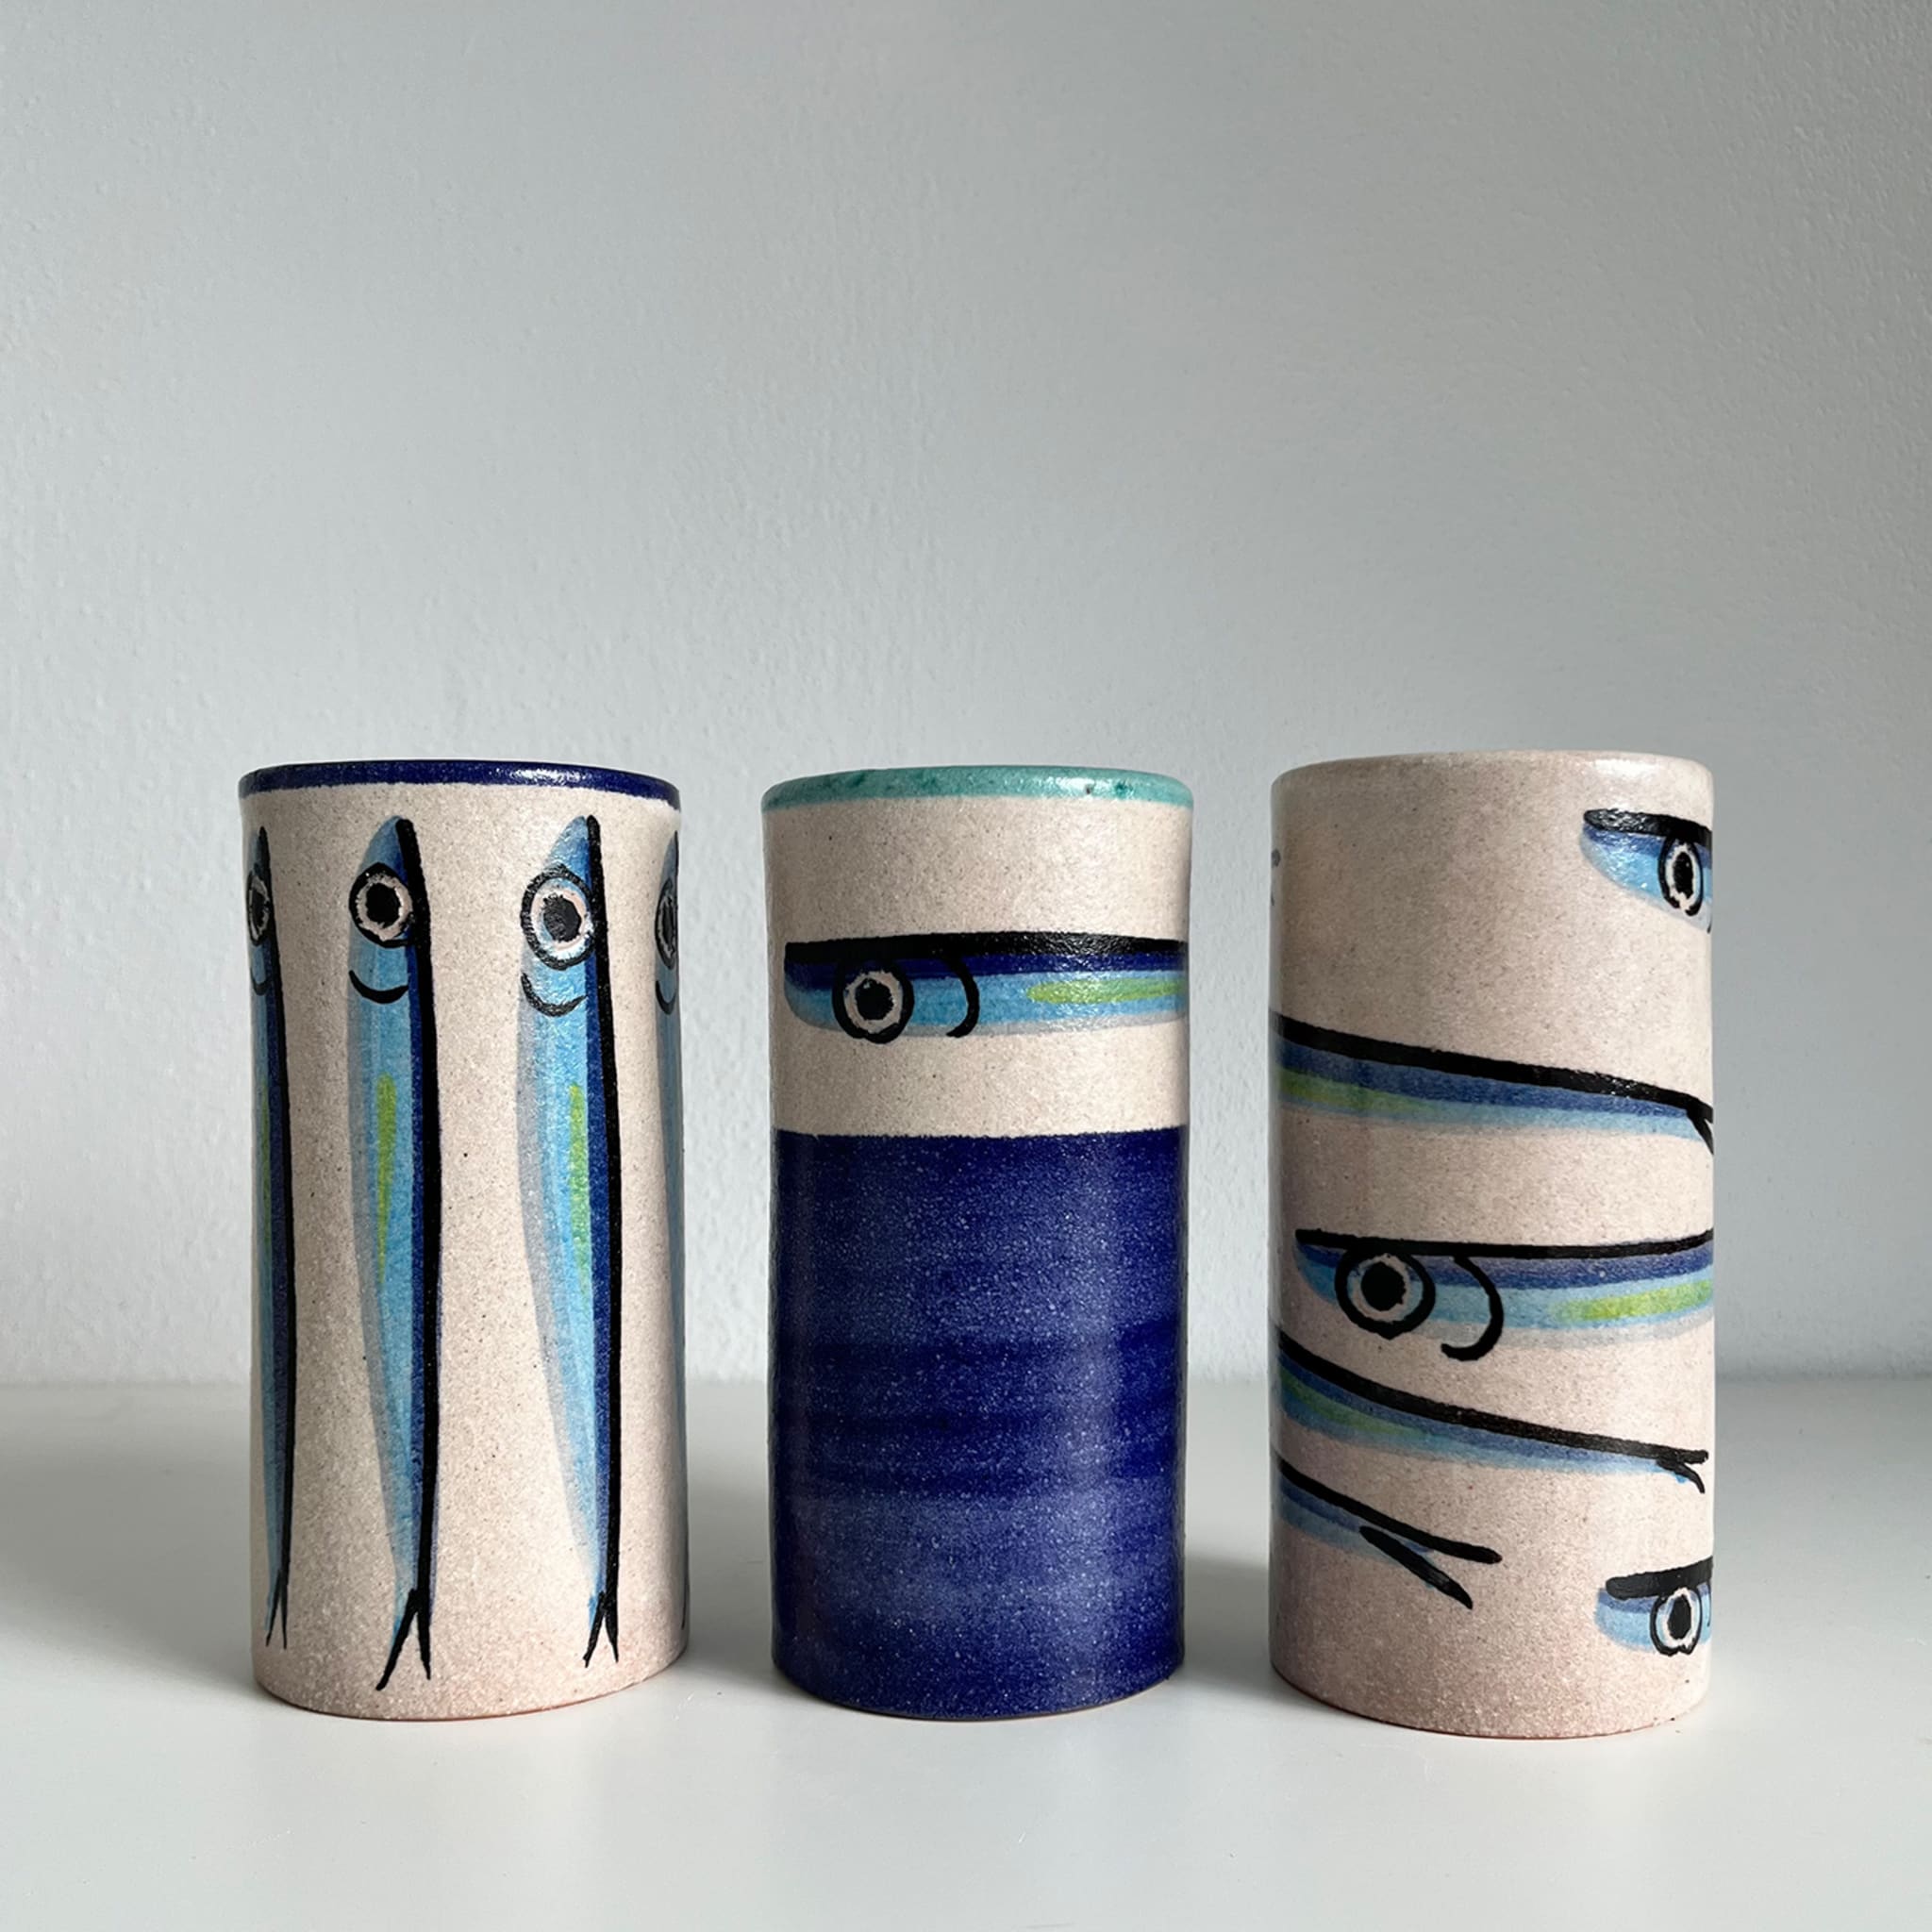 Alici set of three vases - Alternative view 1